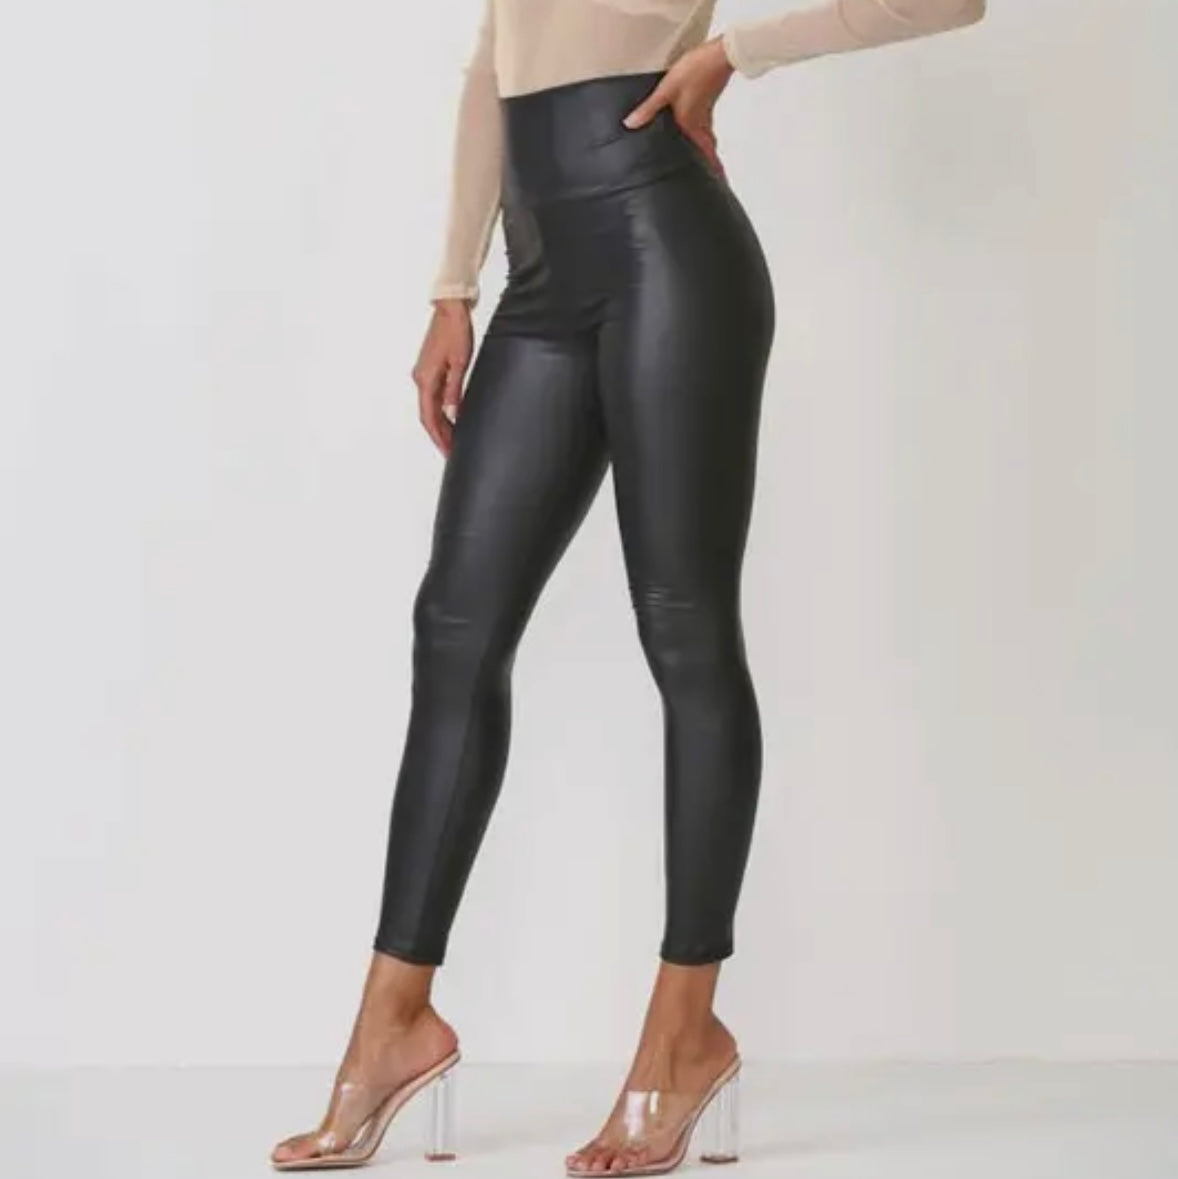 High waist faux leather legging